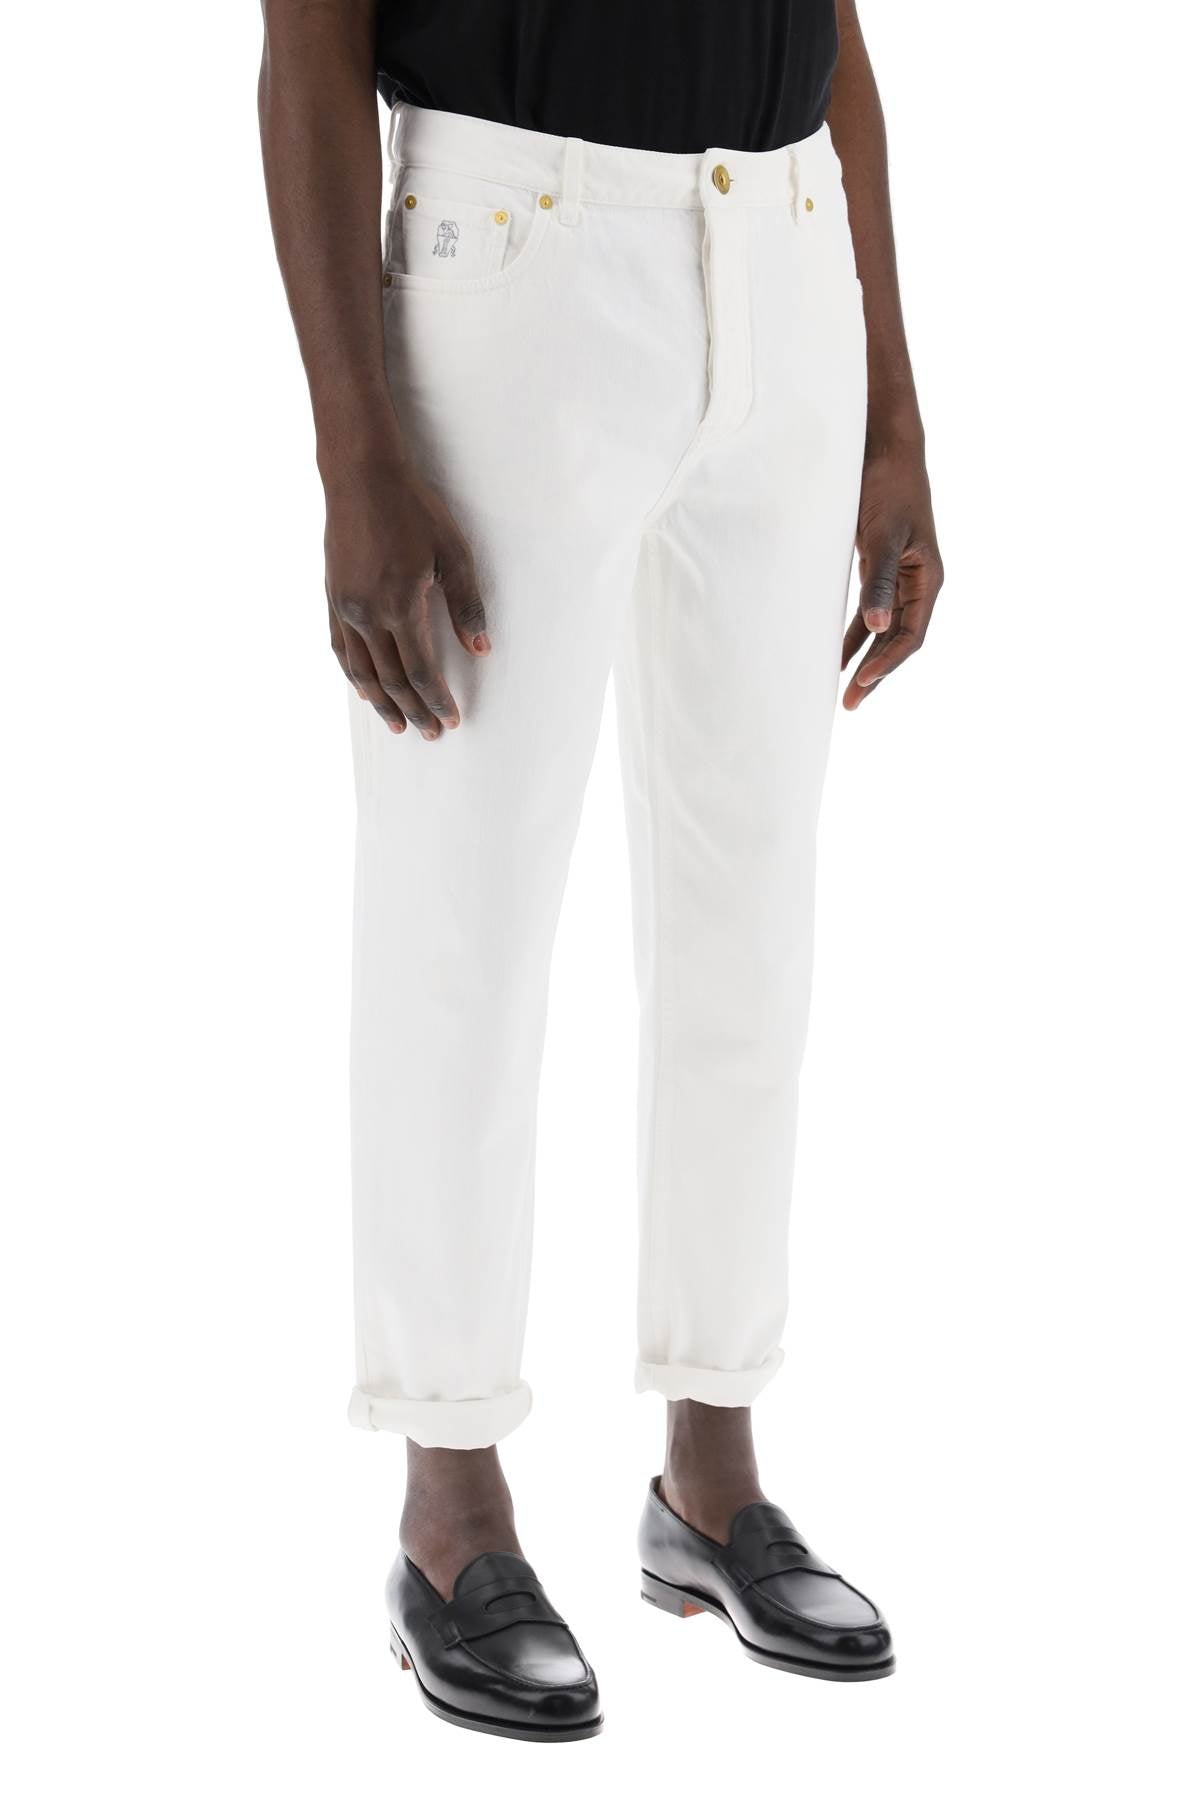 Shop Brunello Cucinelli Men's White Overdyed Denim Jeans